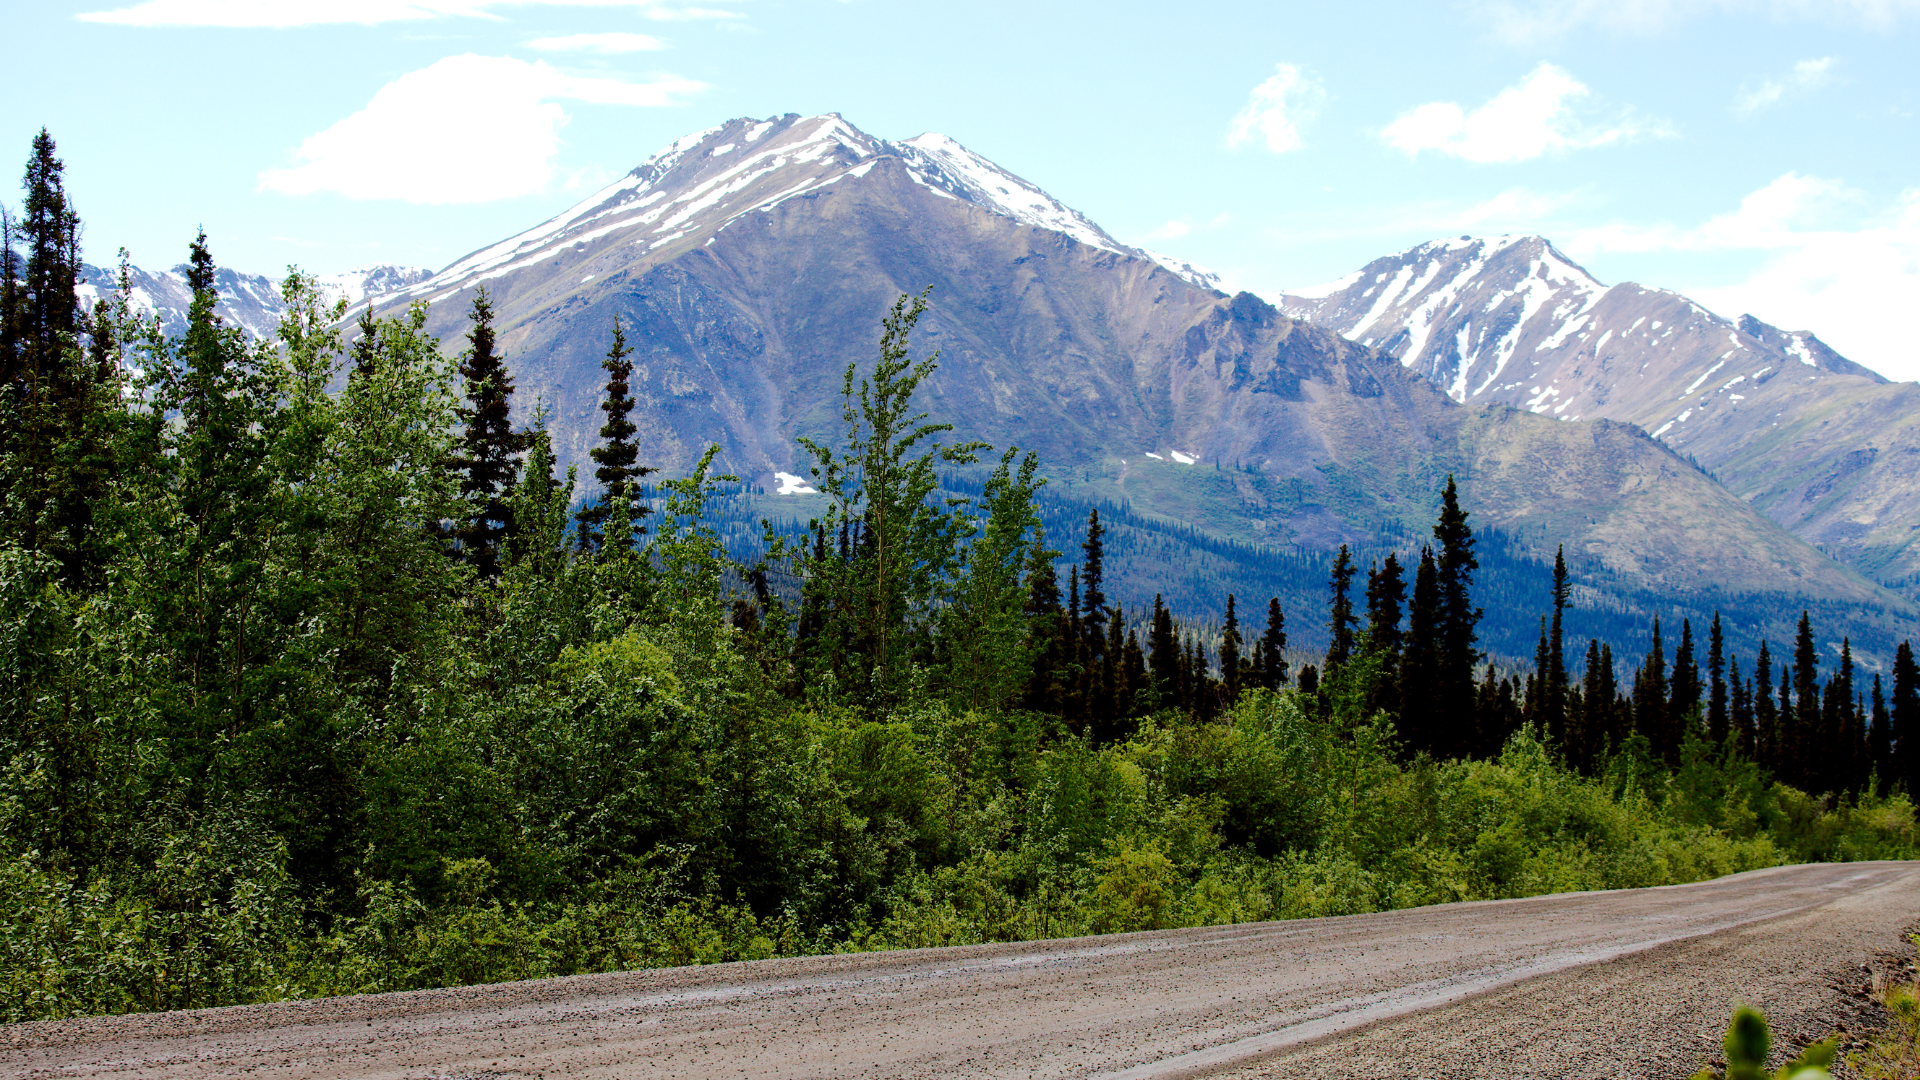 photo of Yukon mountain from CANVA